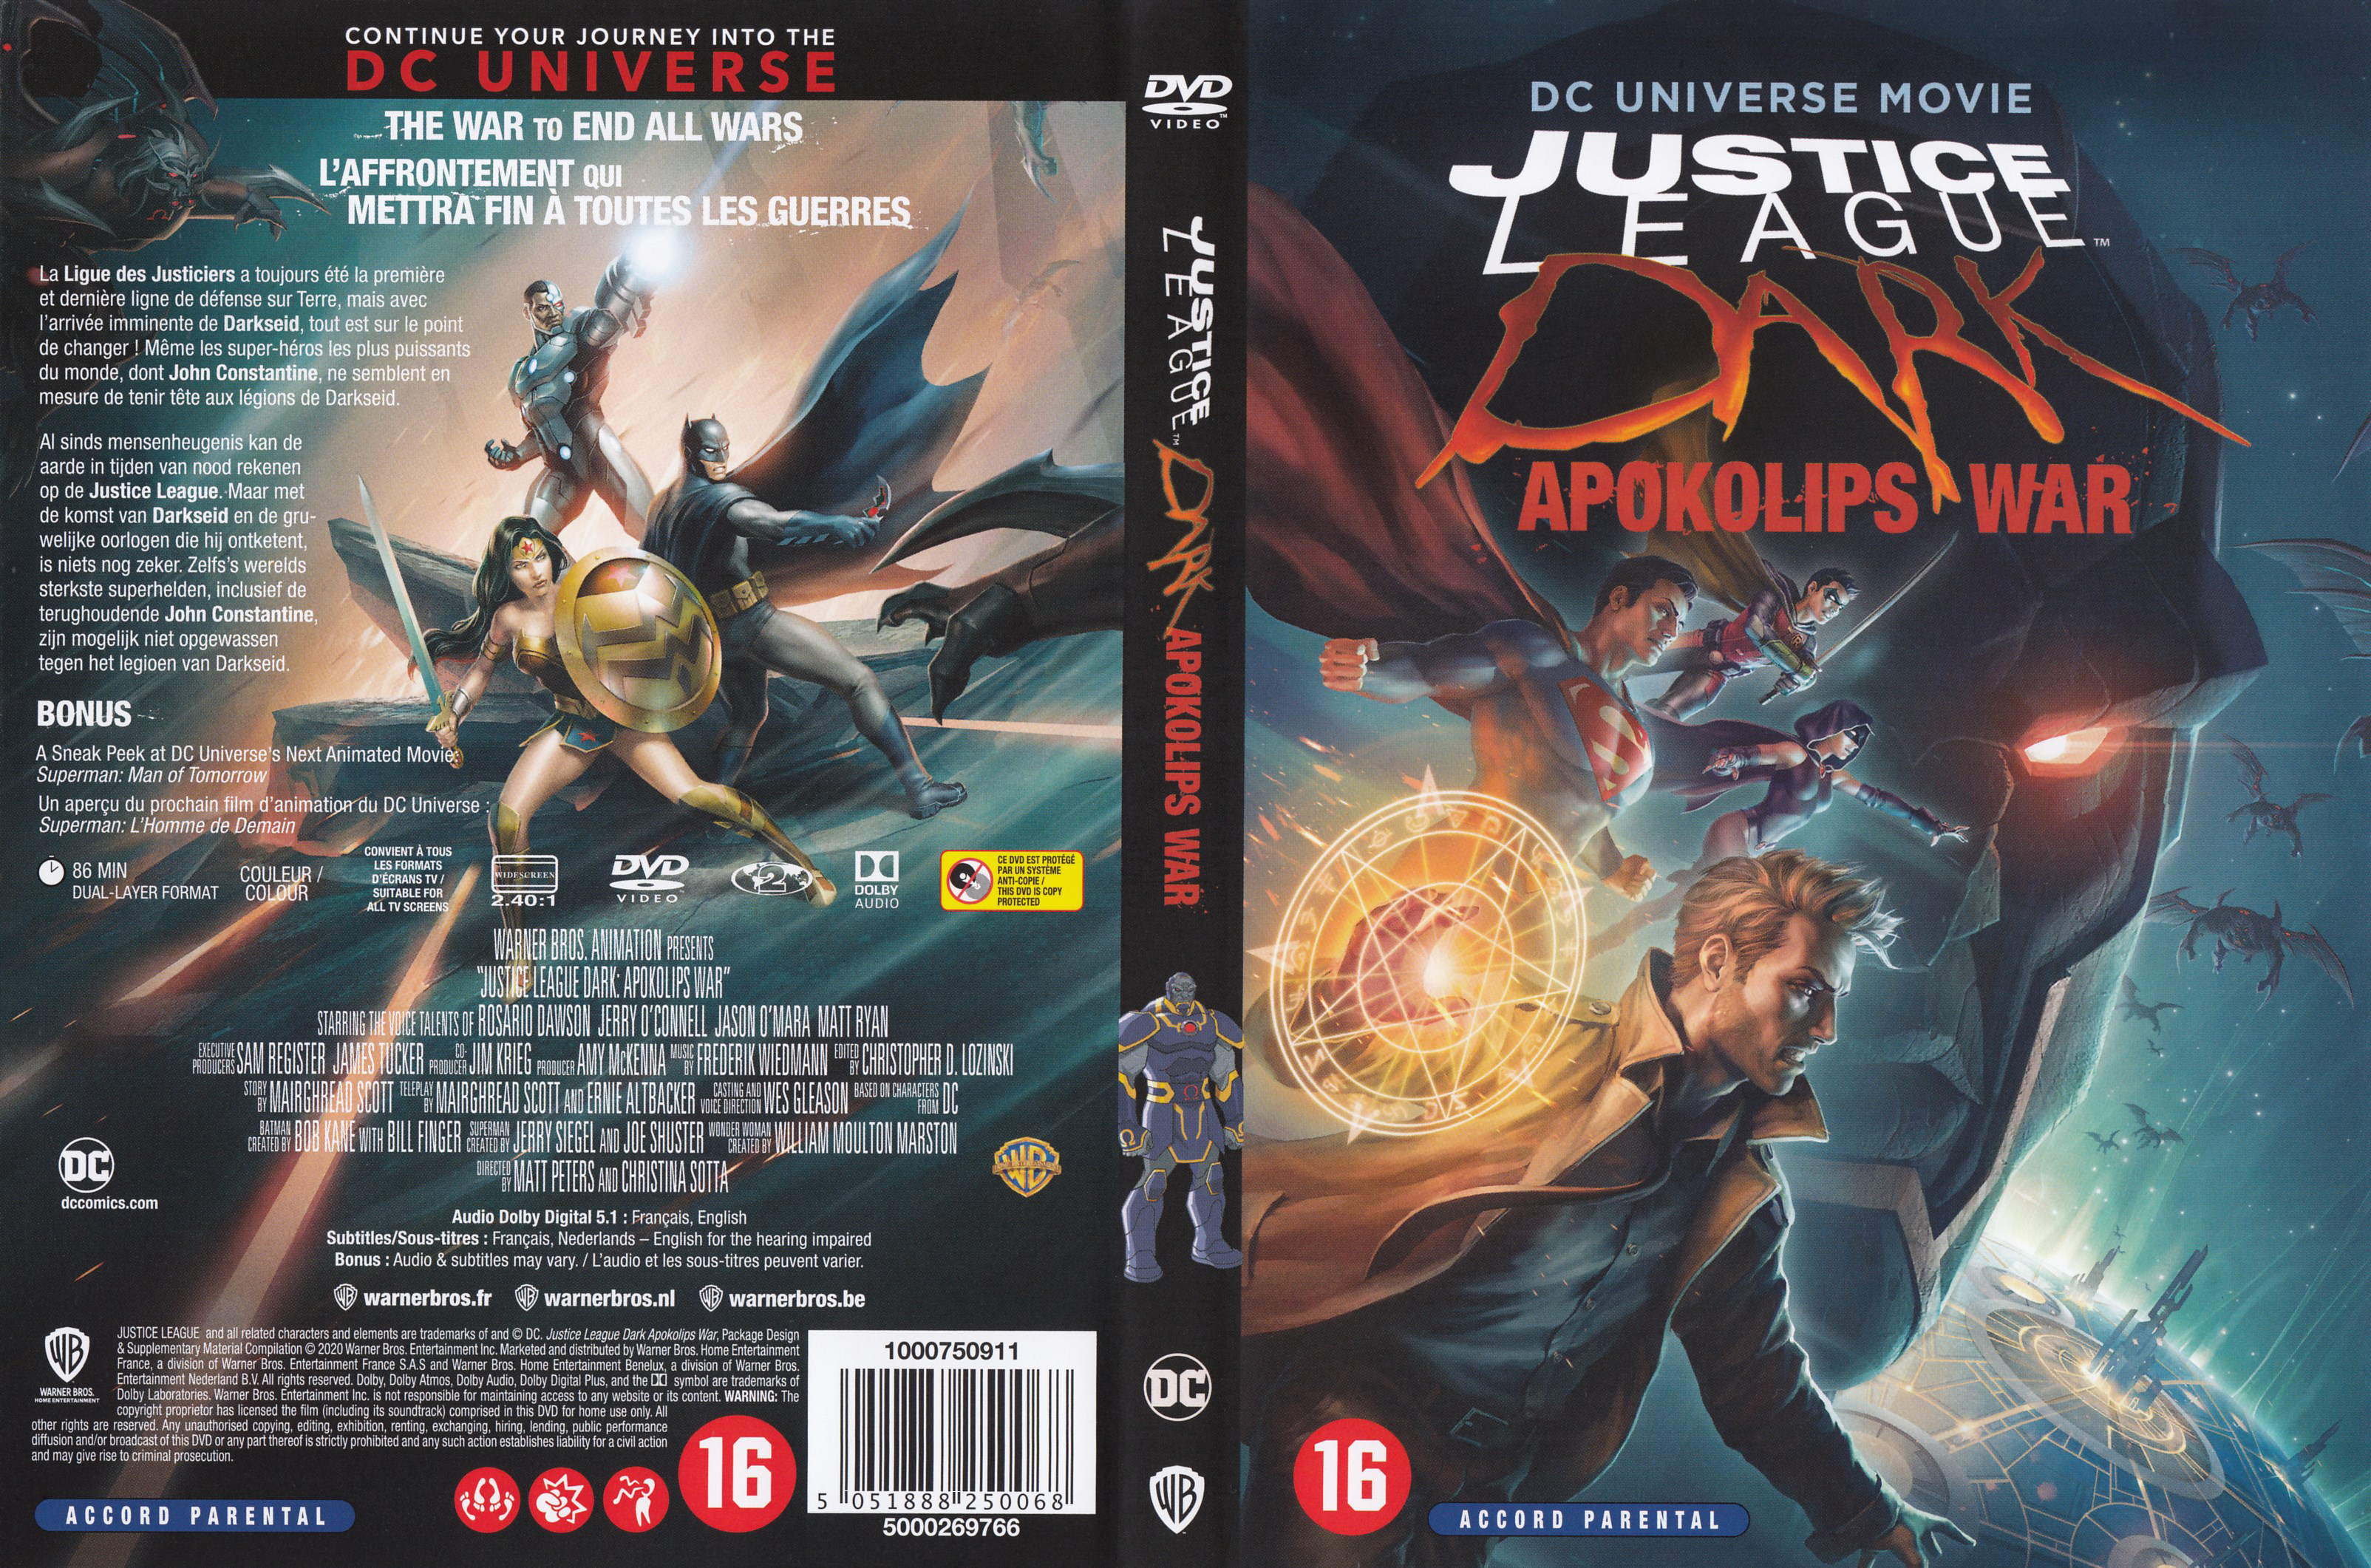 Jaquette DVD Justice League dark Apokolips war